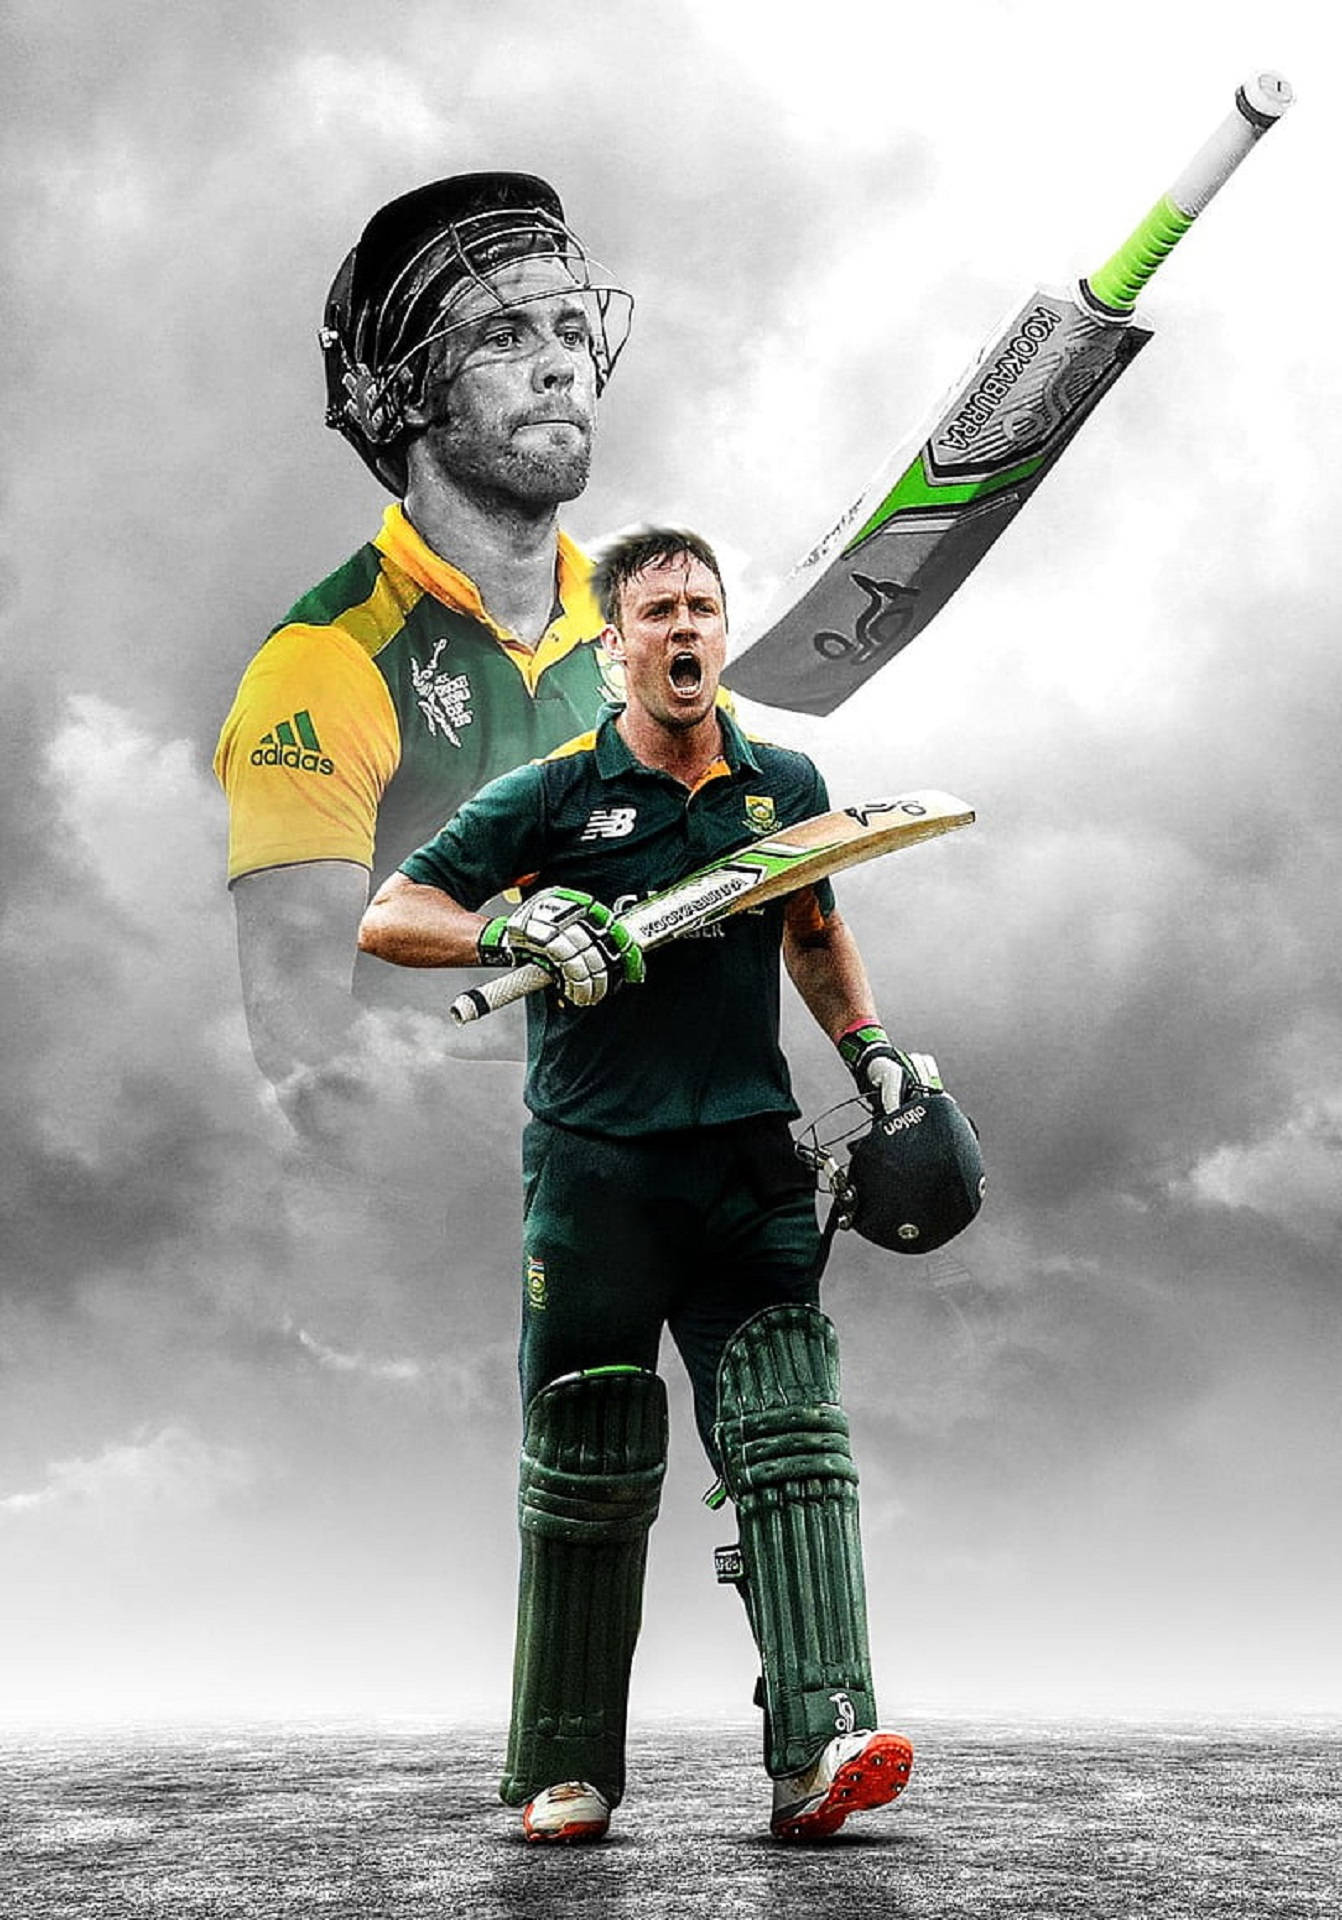 Sydafrika Cricket AB De Villiers tema: 